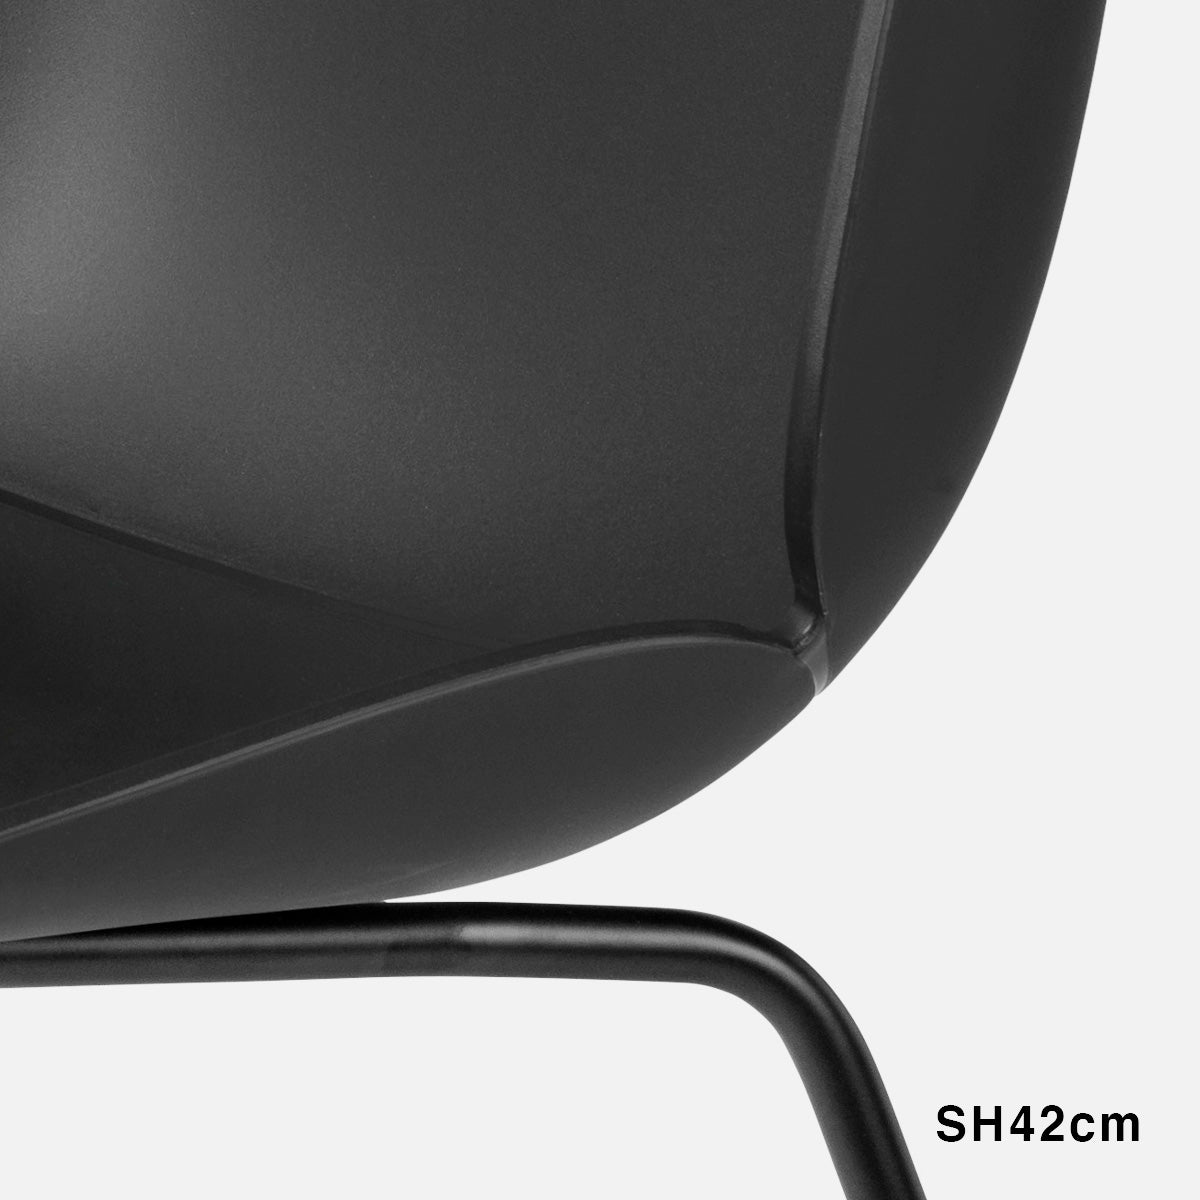 Beetle Chair Un-upholstered Black Conic Base Black 42cm